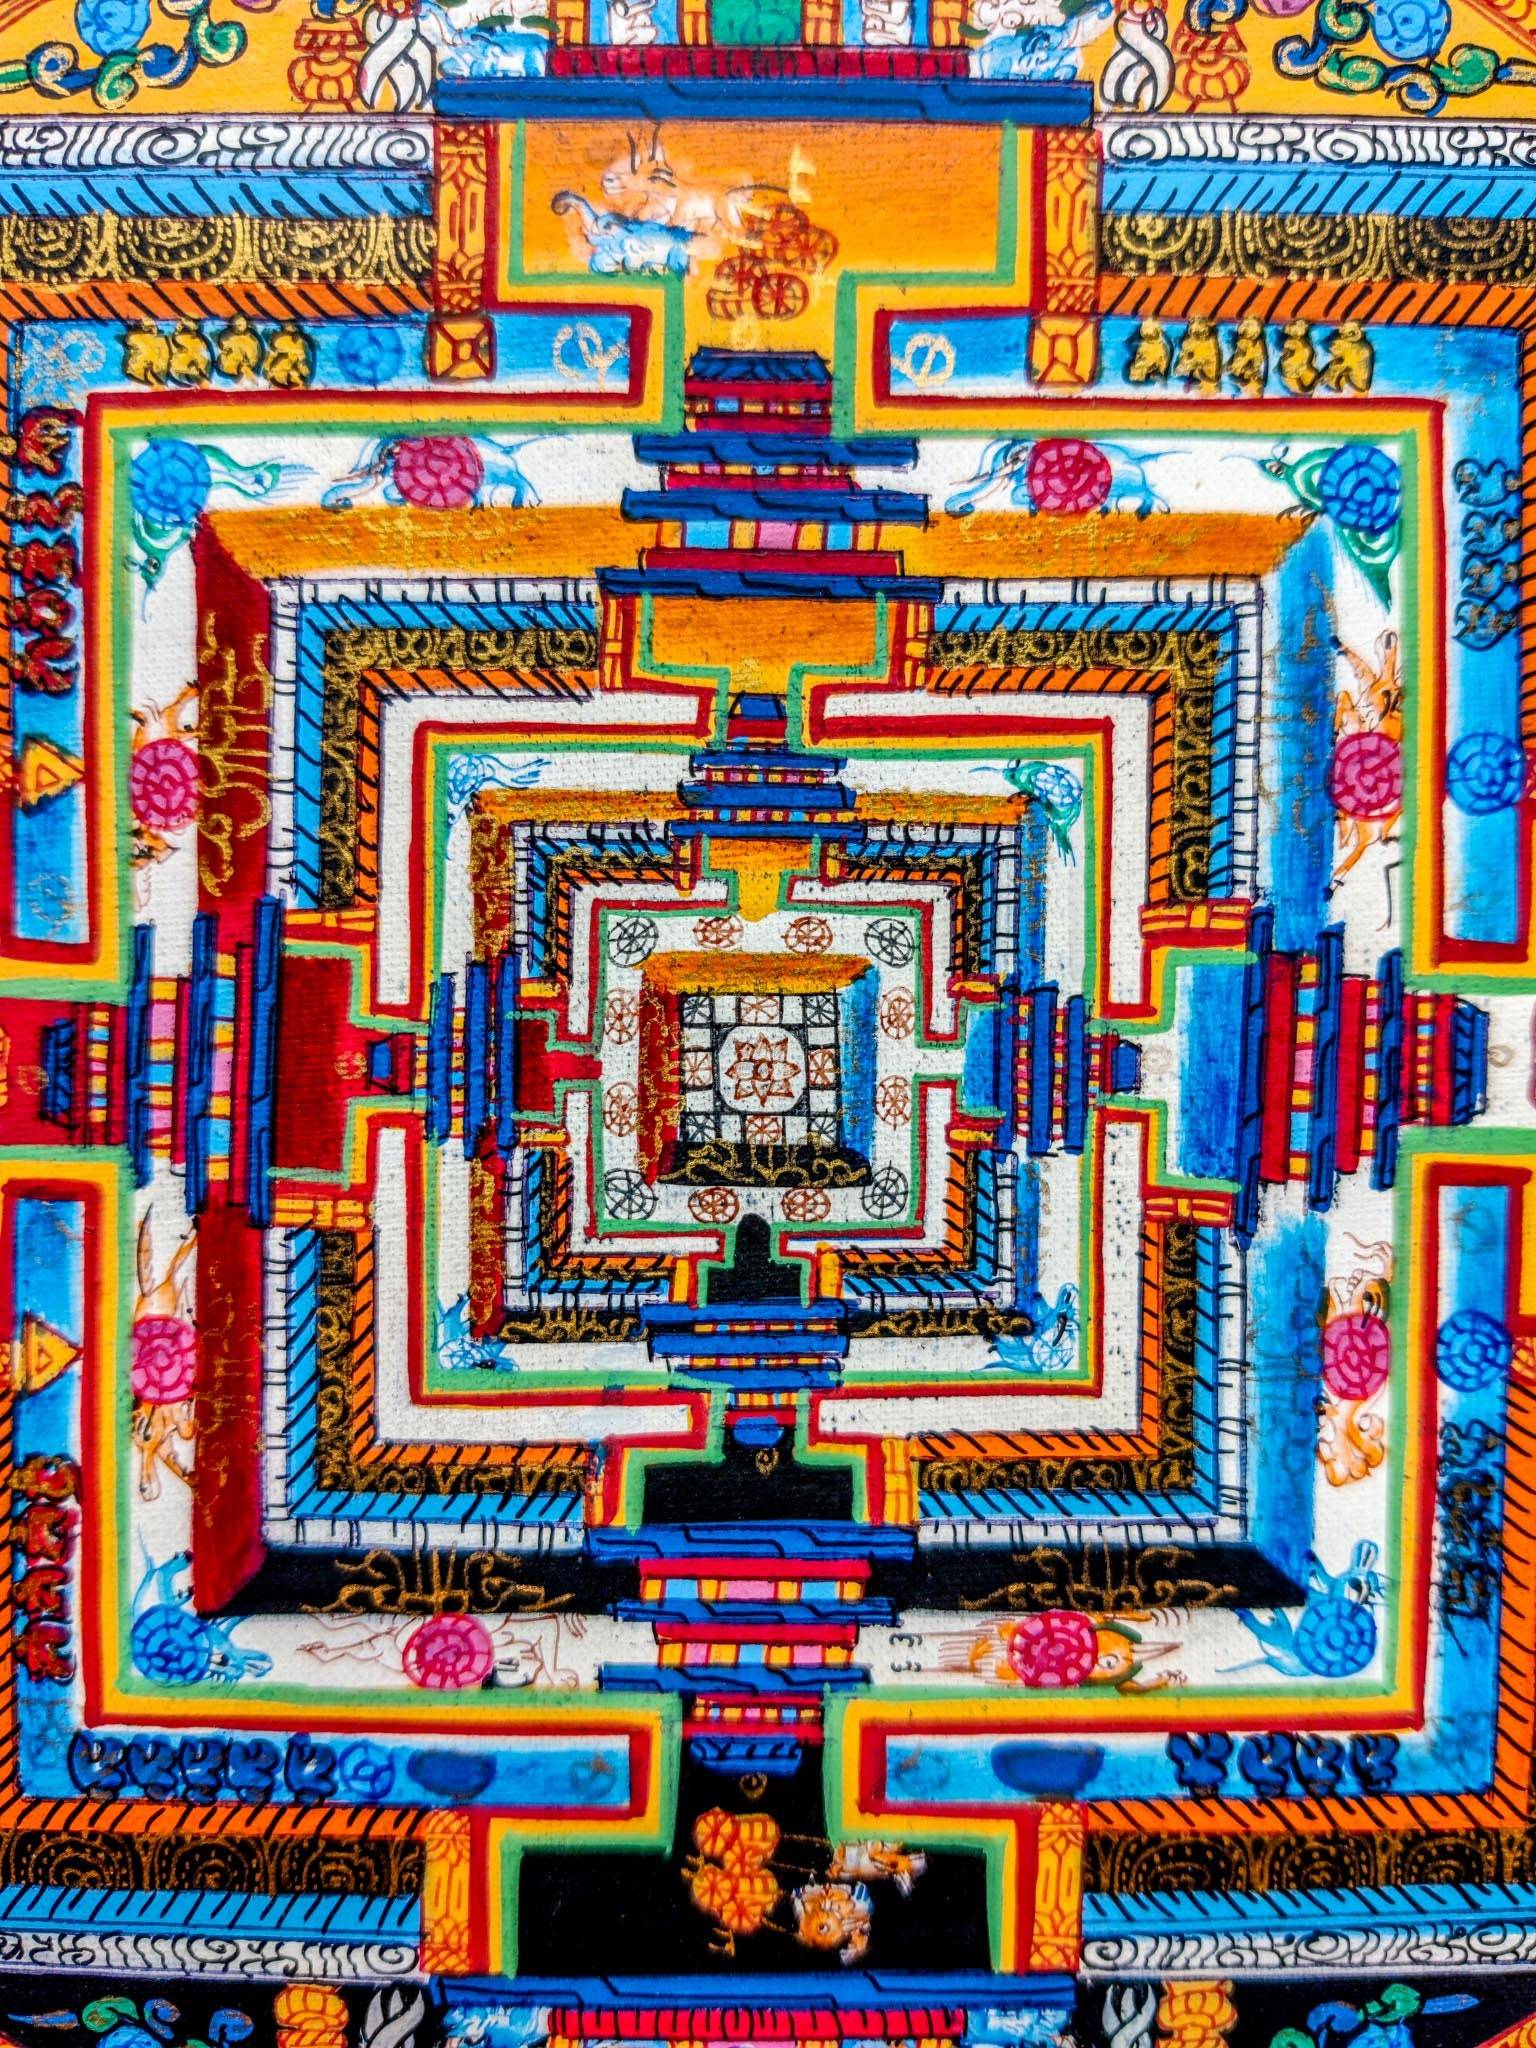 Kalchakra Mandala Thangka Art - Lucky Thanka